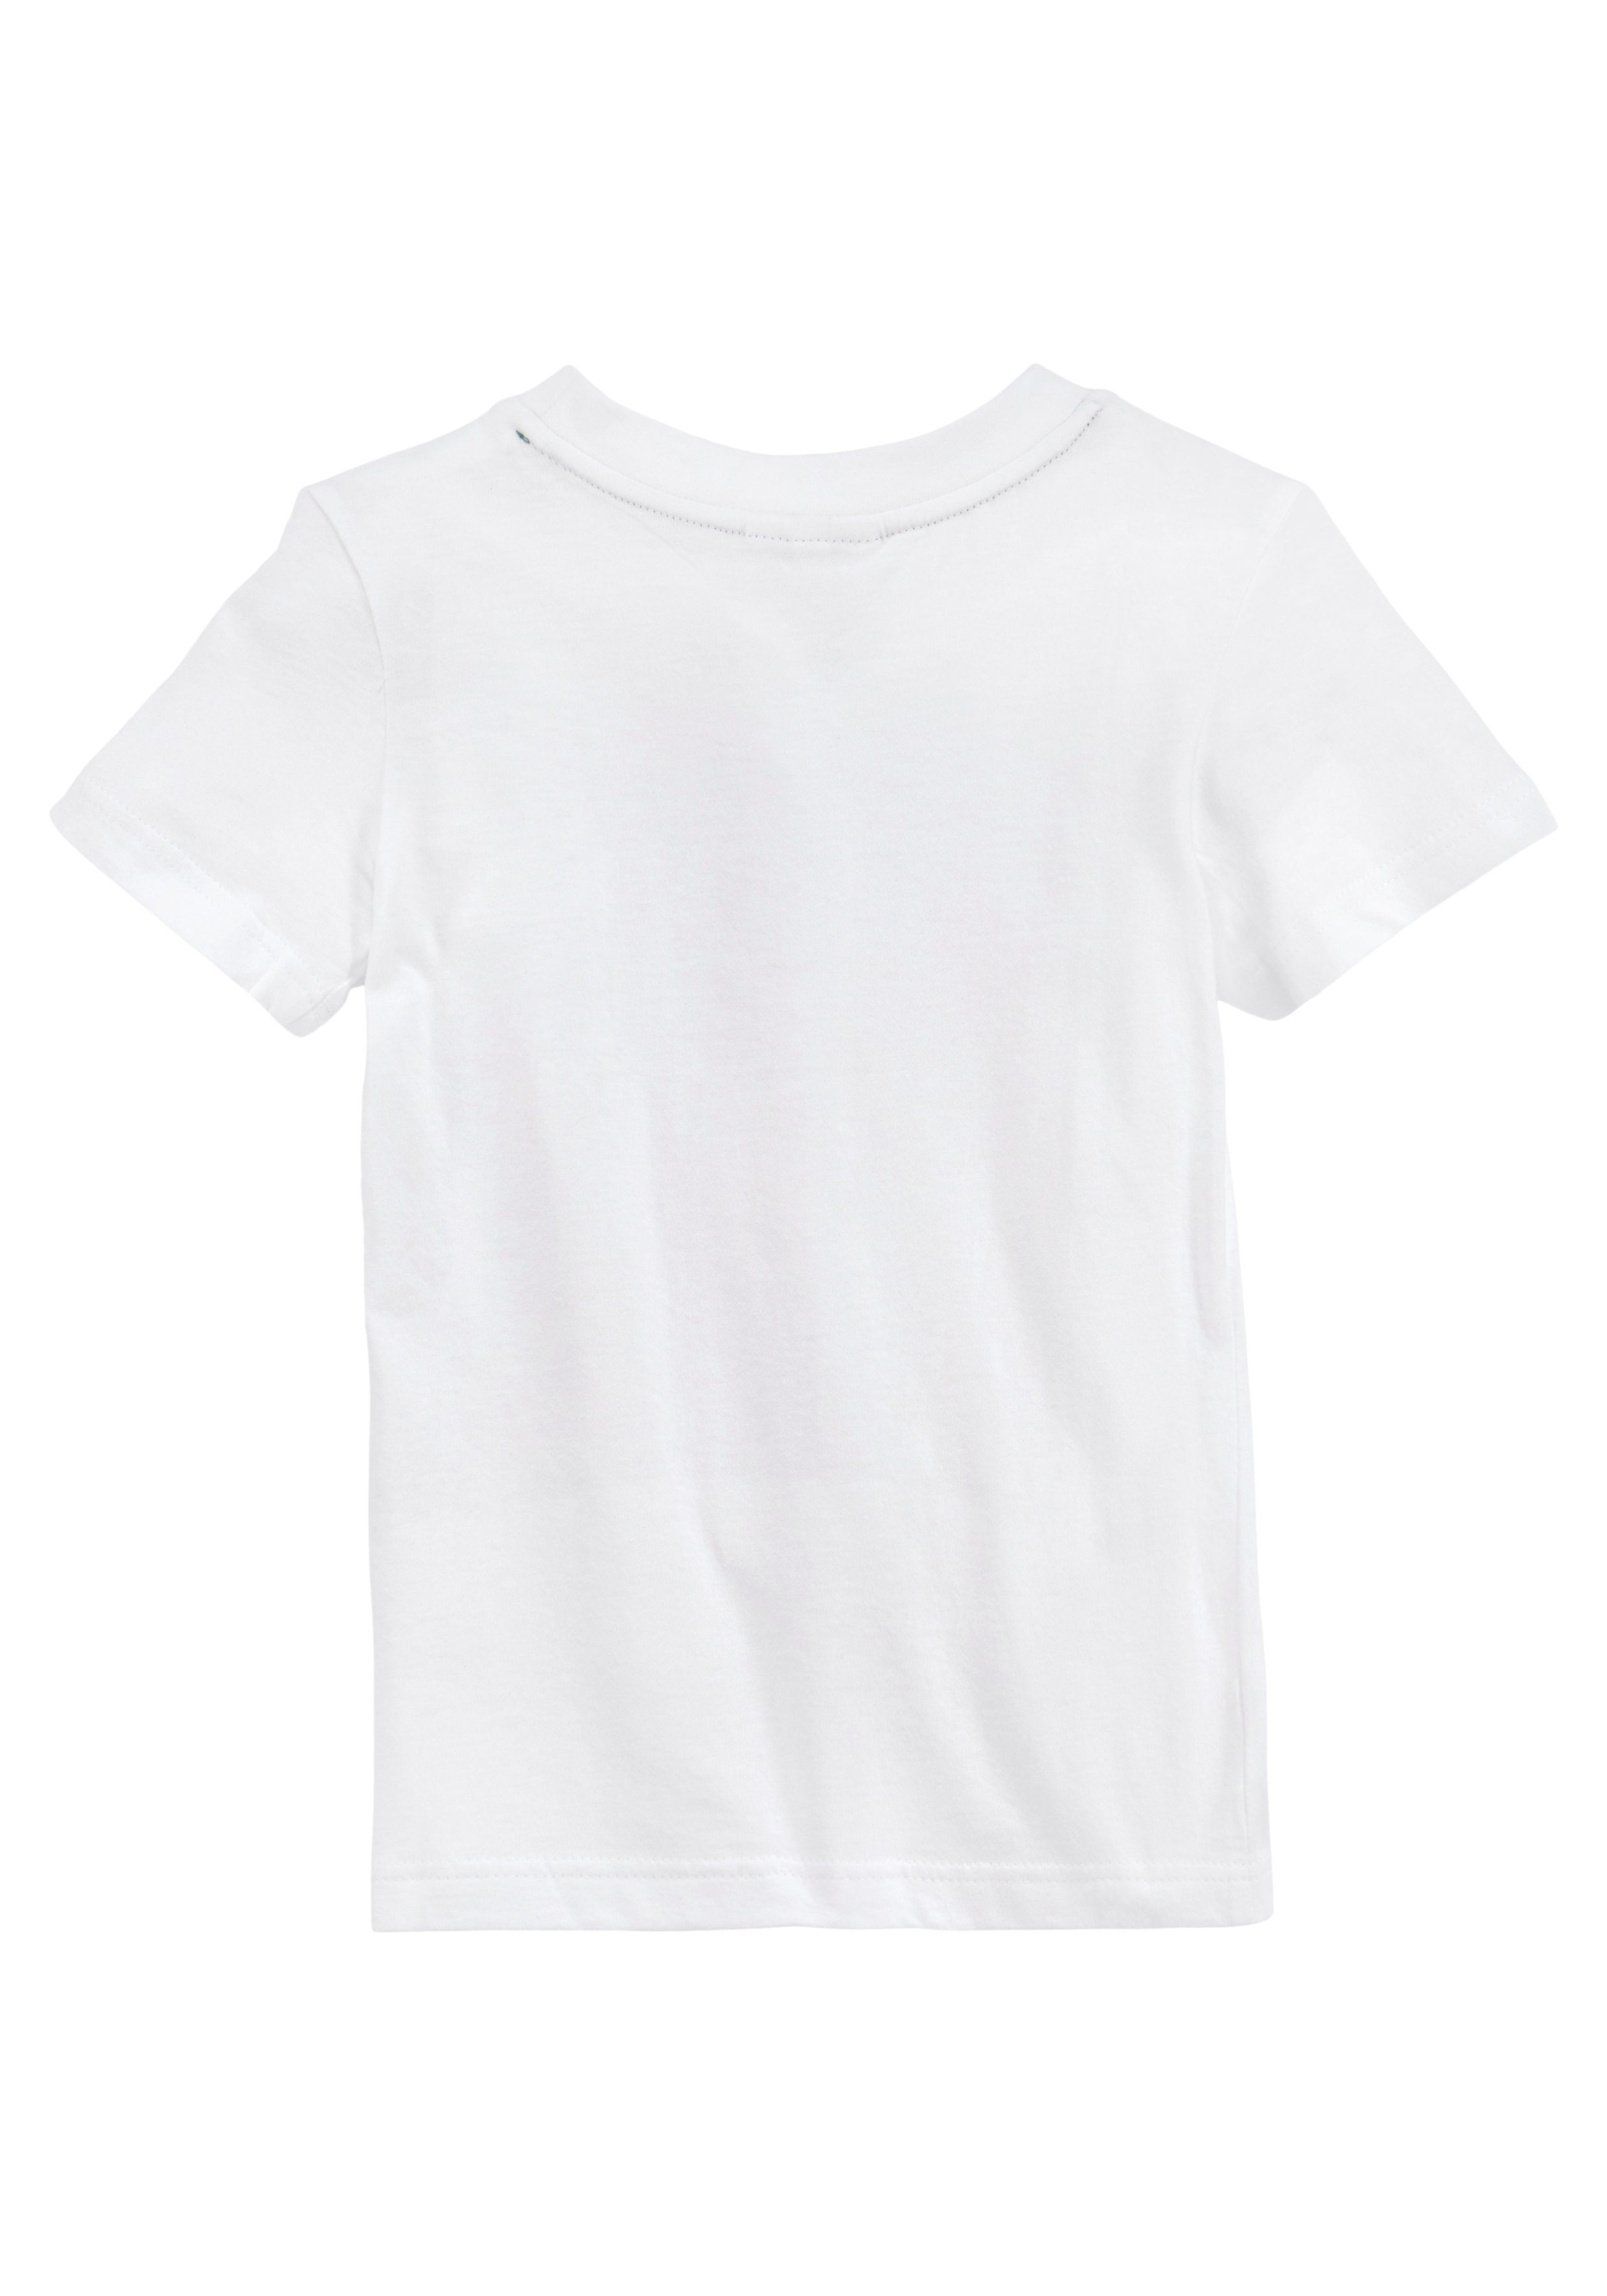 Lacoste auf WHITE Lacoste-Krokodil mit Brusthöhe T-Shirt